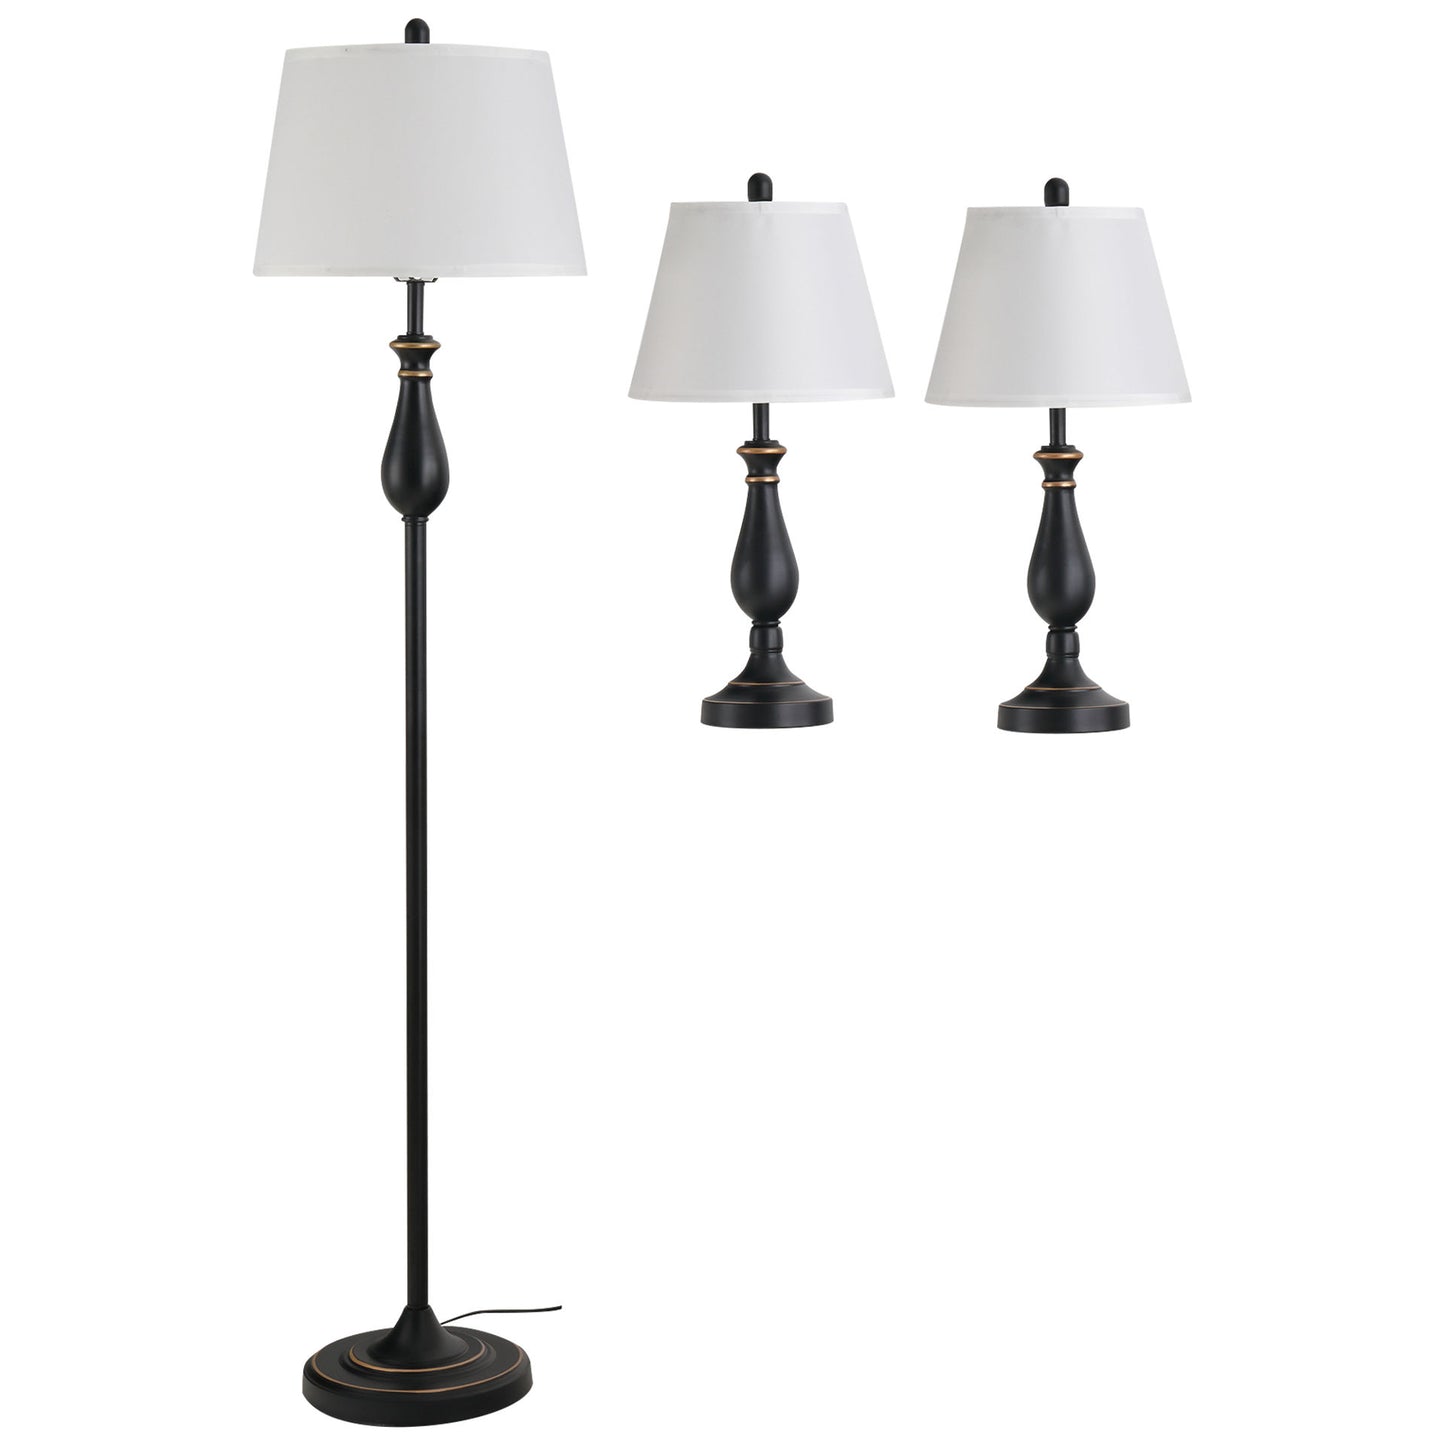 Nancy's Alnwick Set of 3 lamps 2 table lamp (H 158cm) + 1 floor lamp (H 62cm) Vintage, black + white